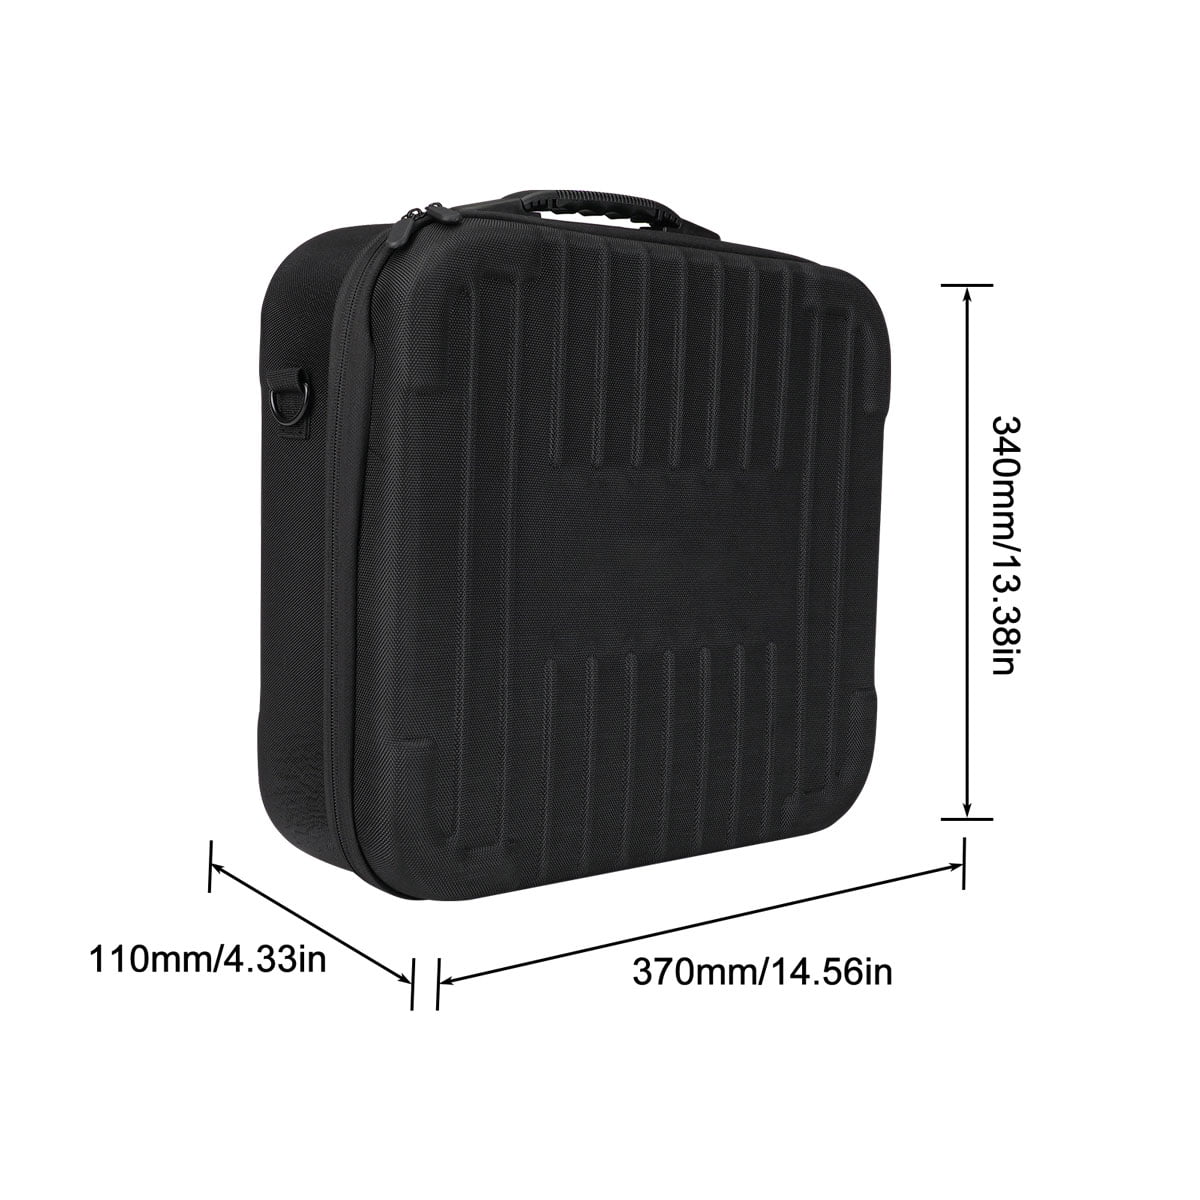 Retekess TT106 Tourist Guide System with Portable Carry Bag